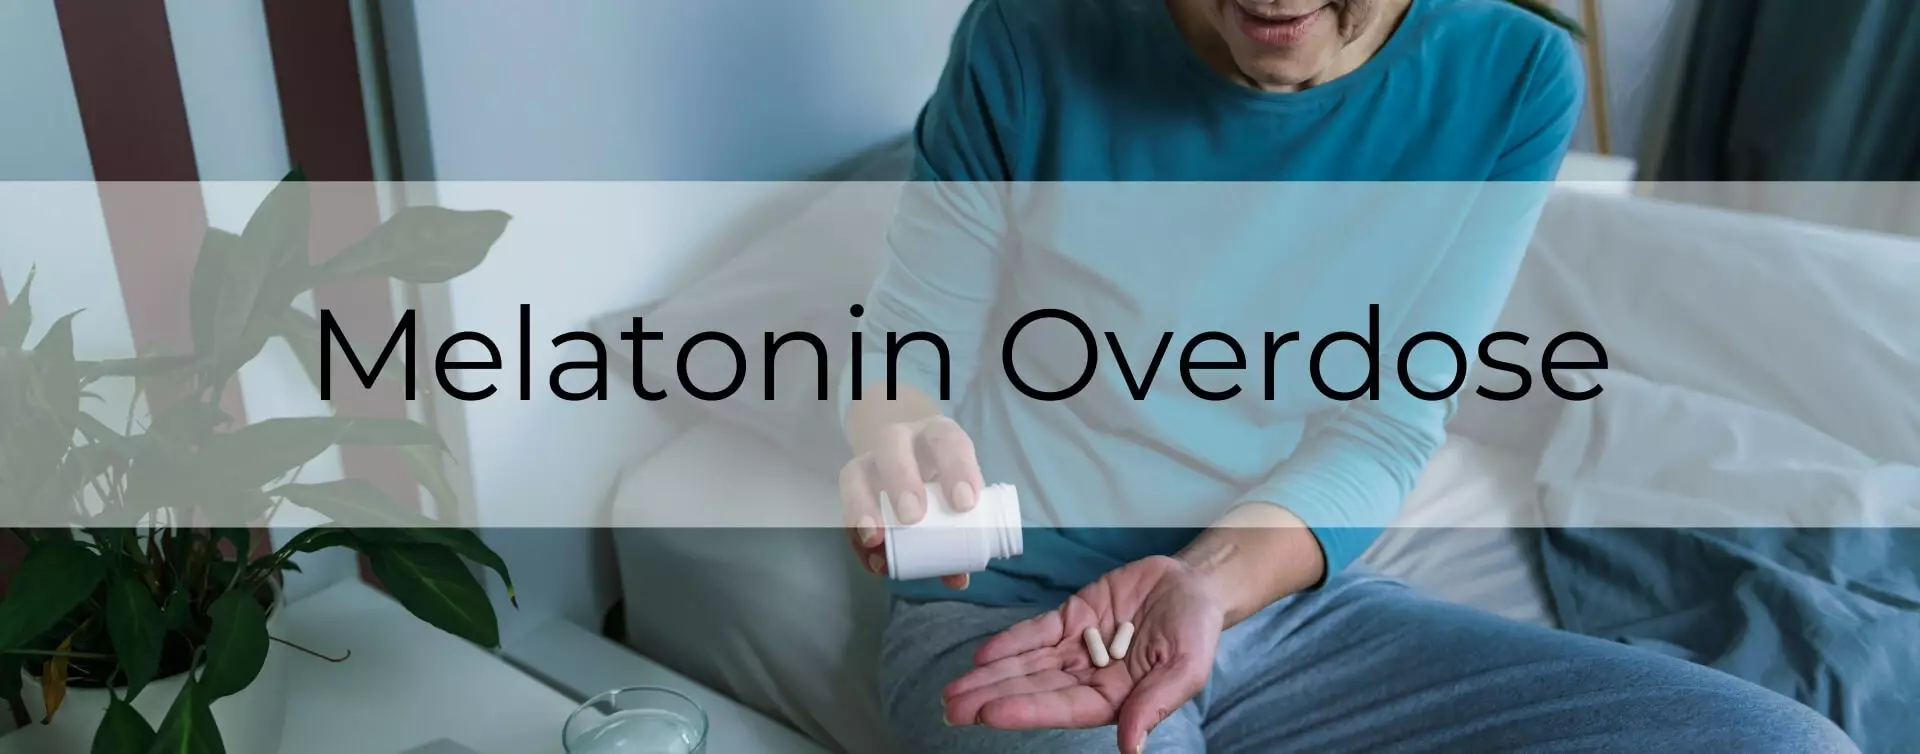 melatonin overdose main-post-image